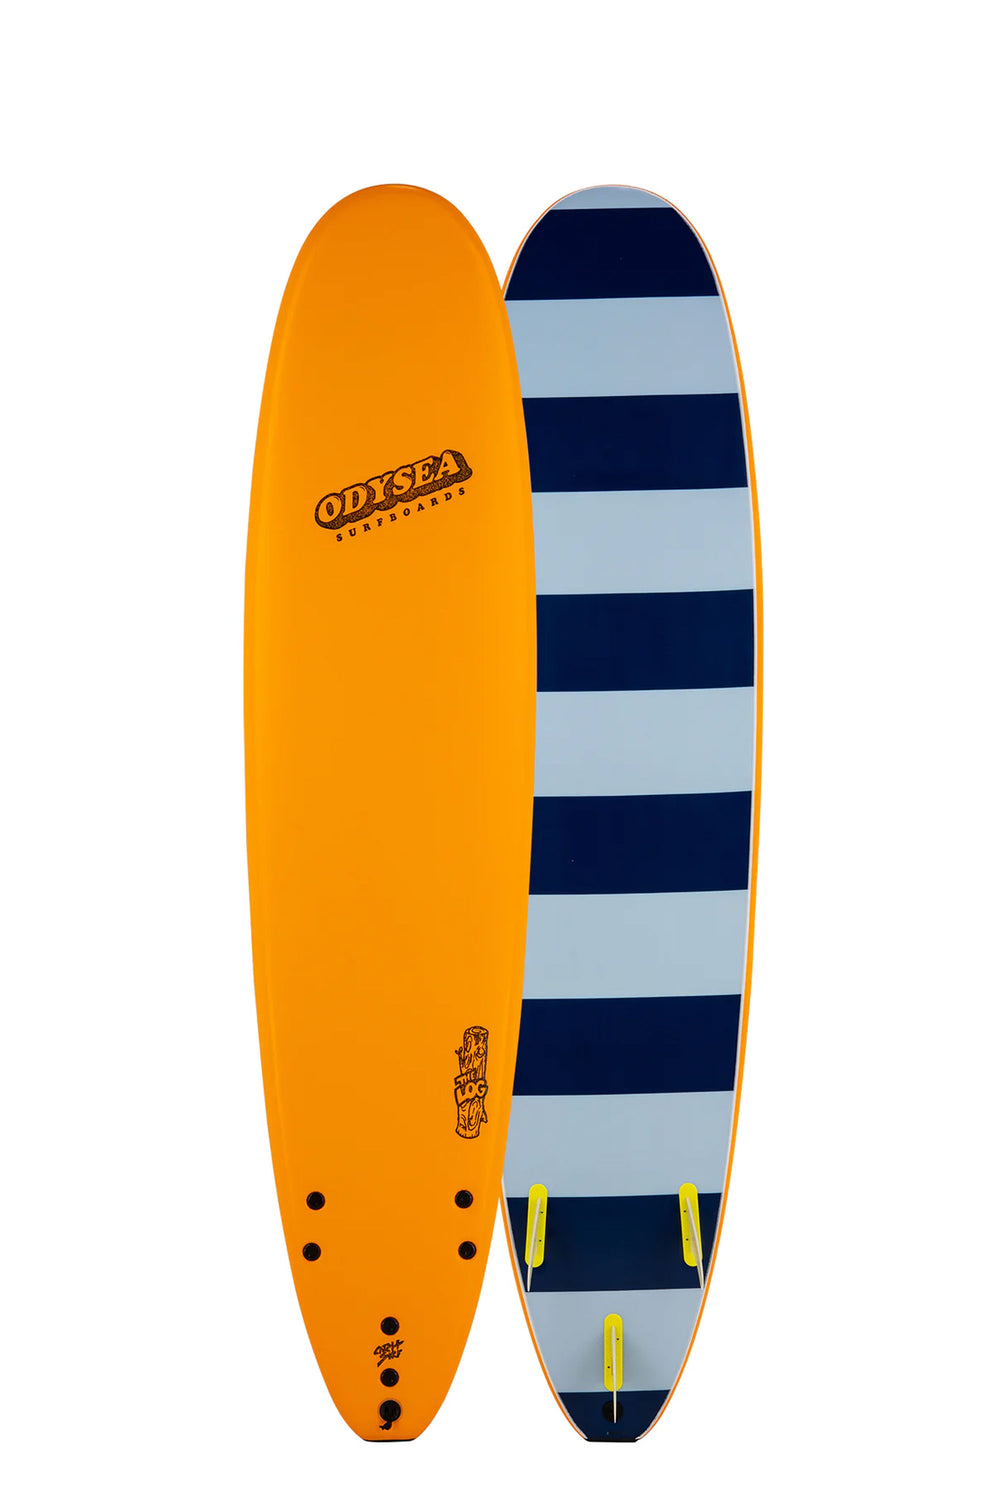 Pukas-Surf-Shop-Catch-Surfboards-Odysea-log-8_0-ODY80